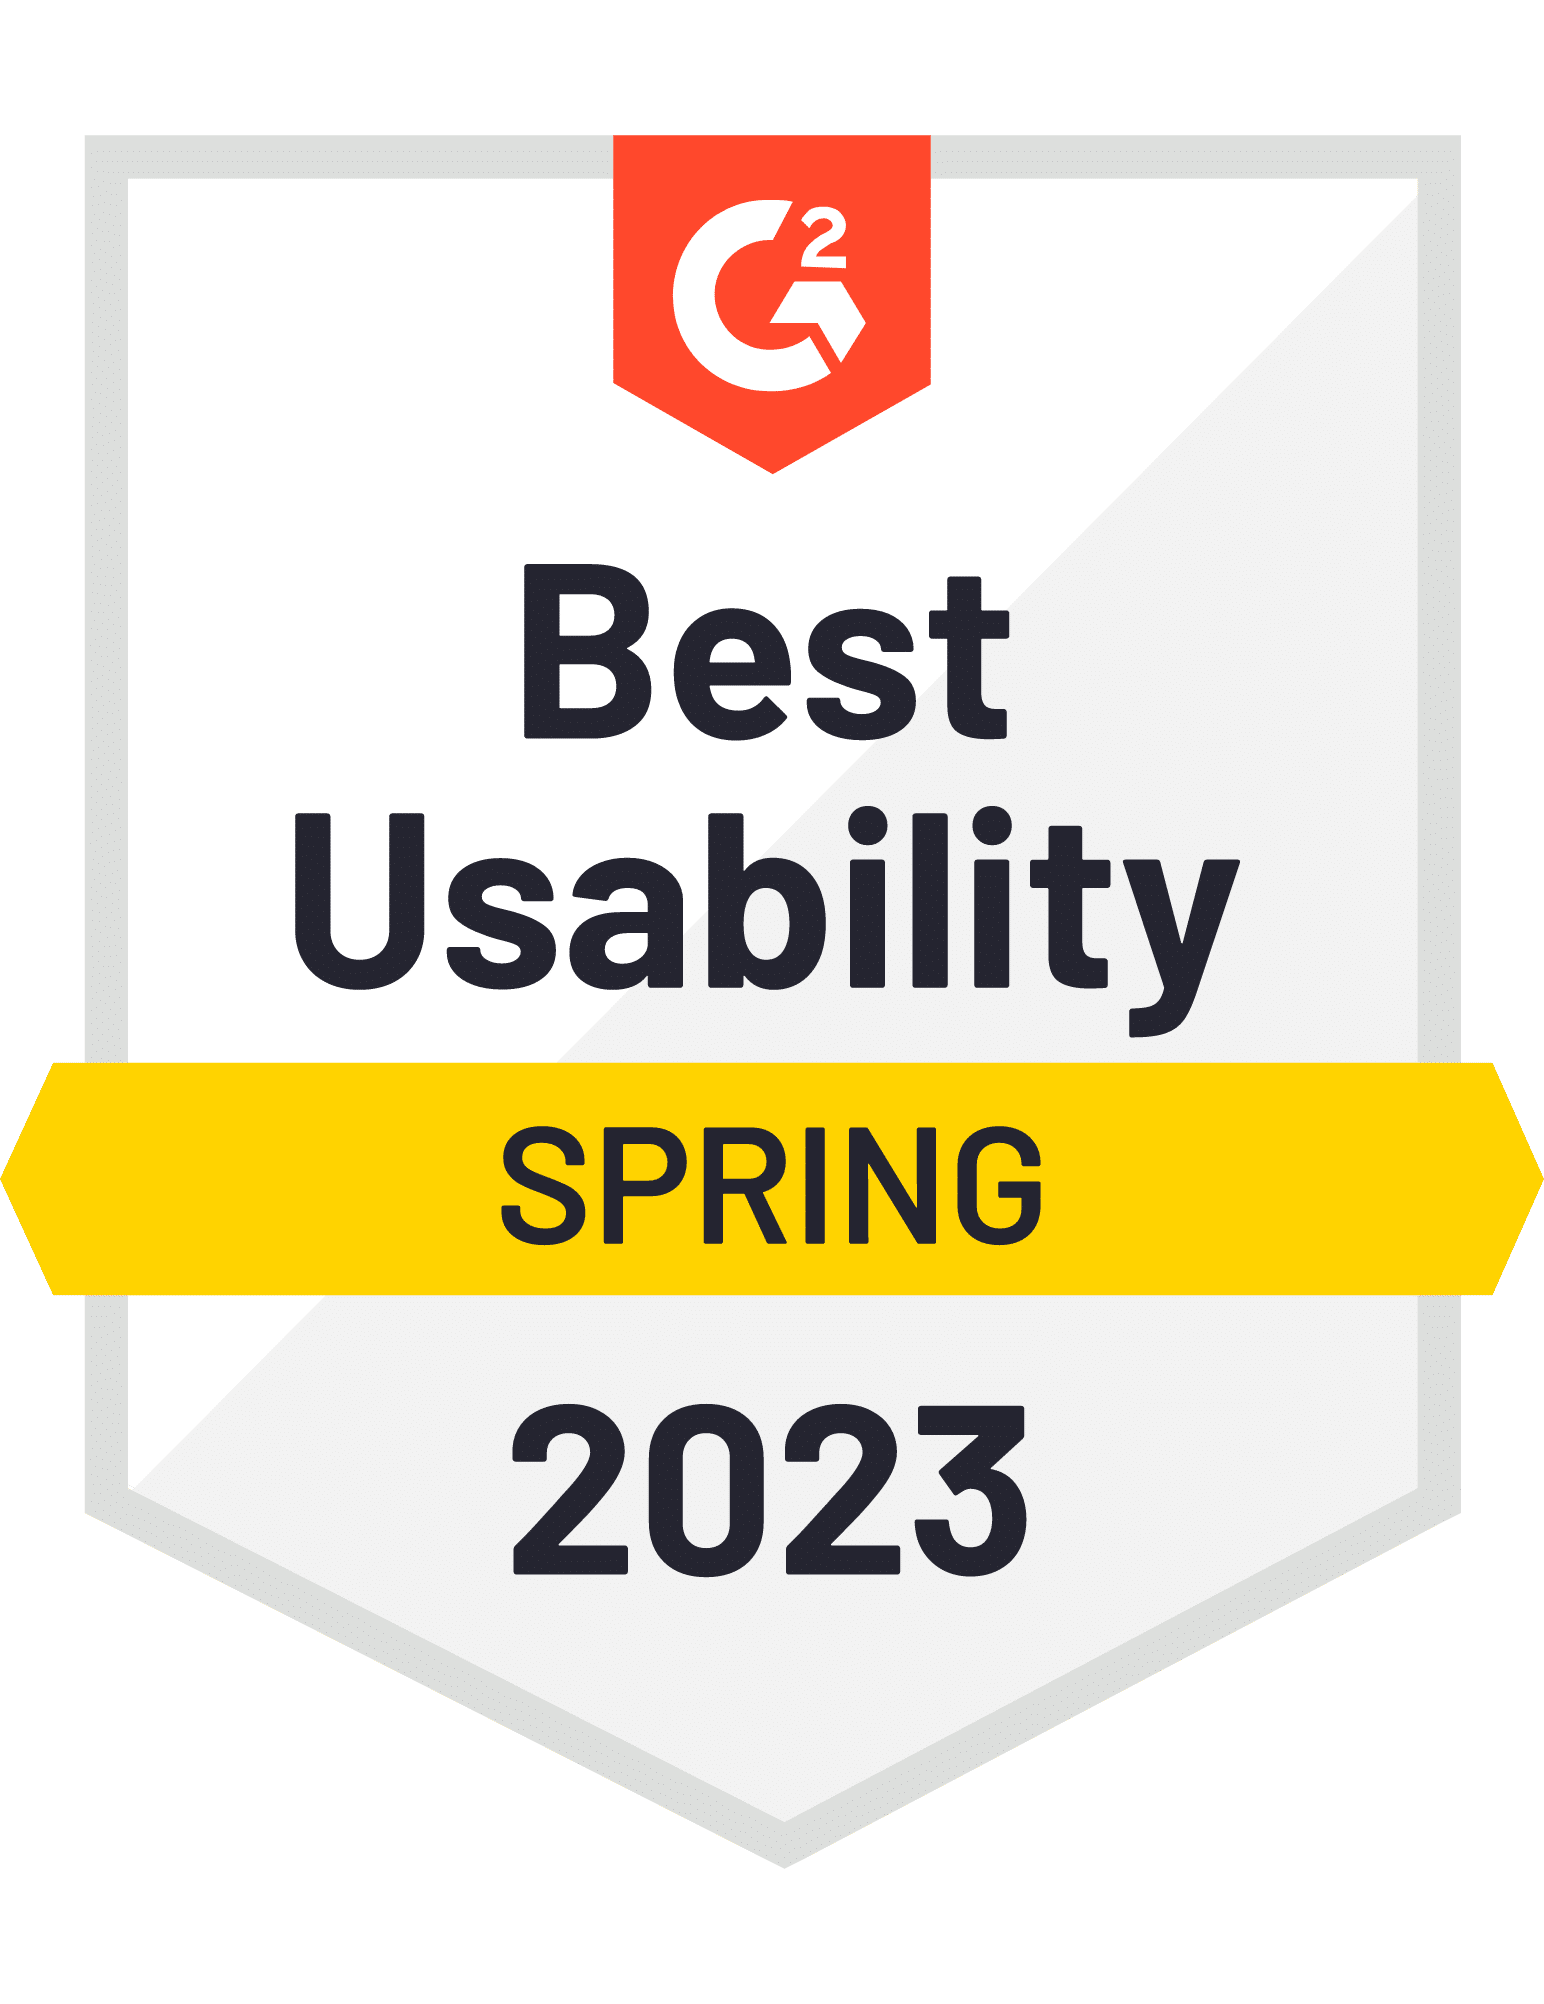 Best Usability Spring 2023 G2 Award